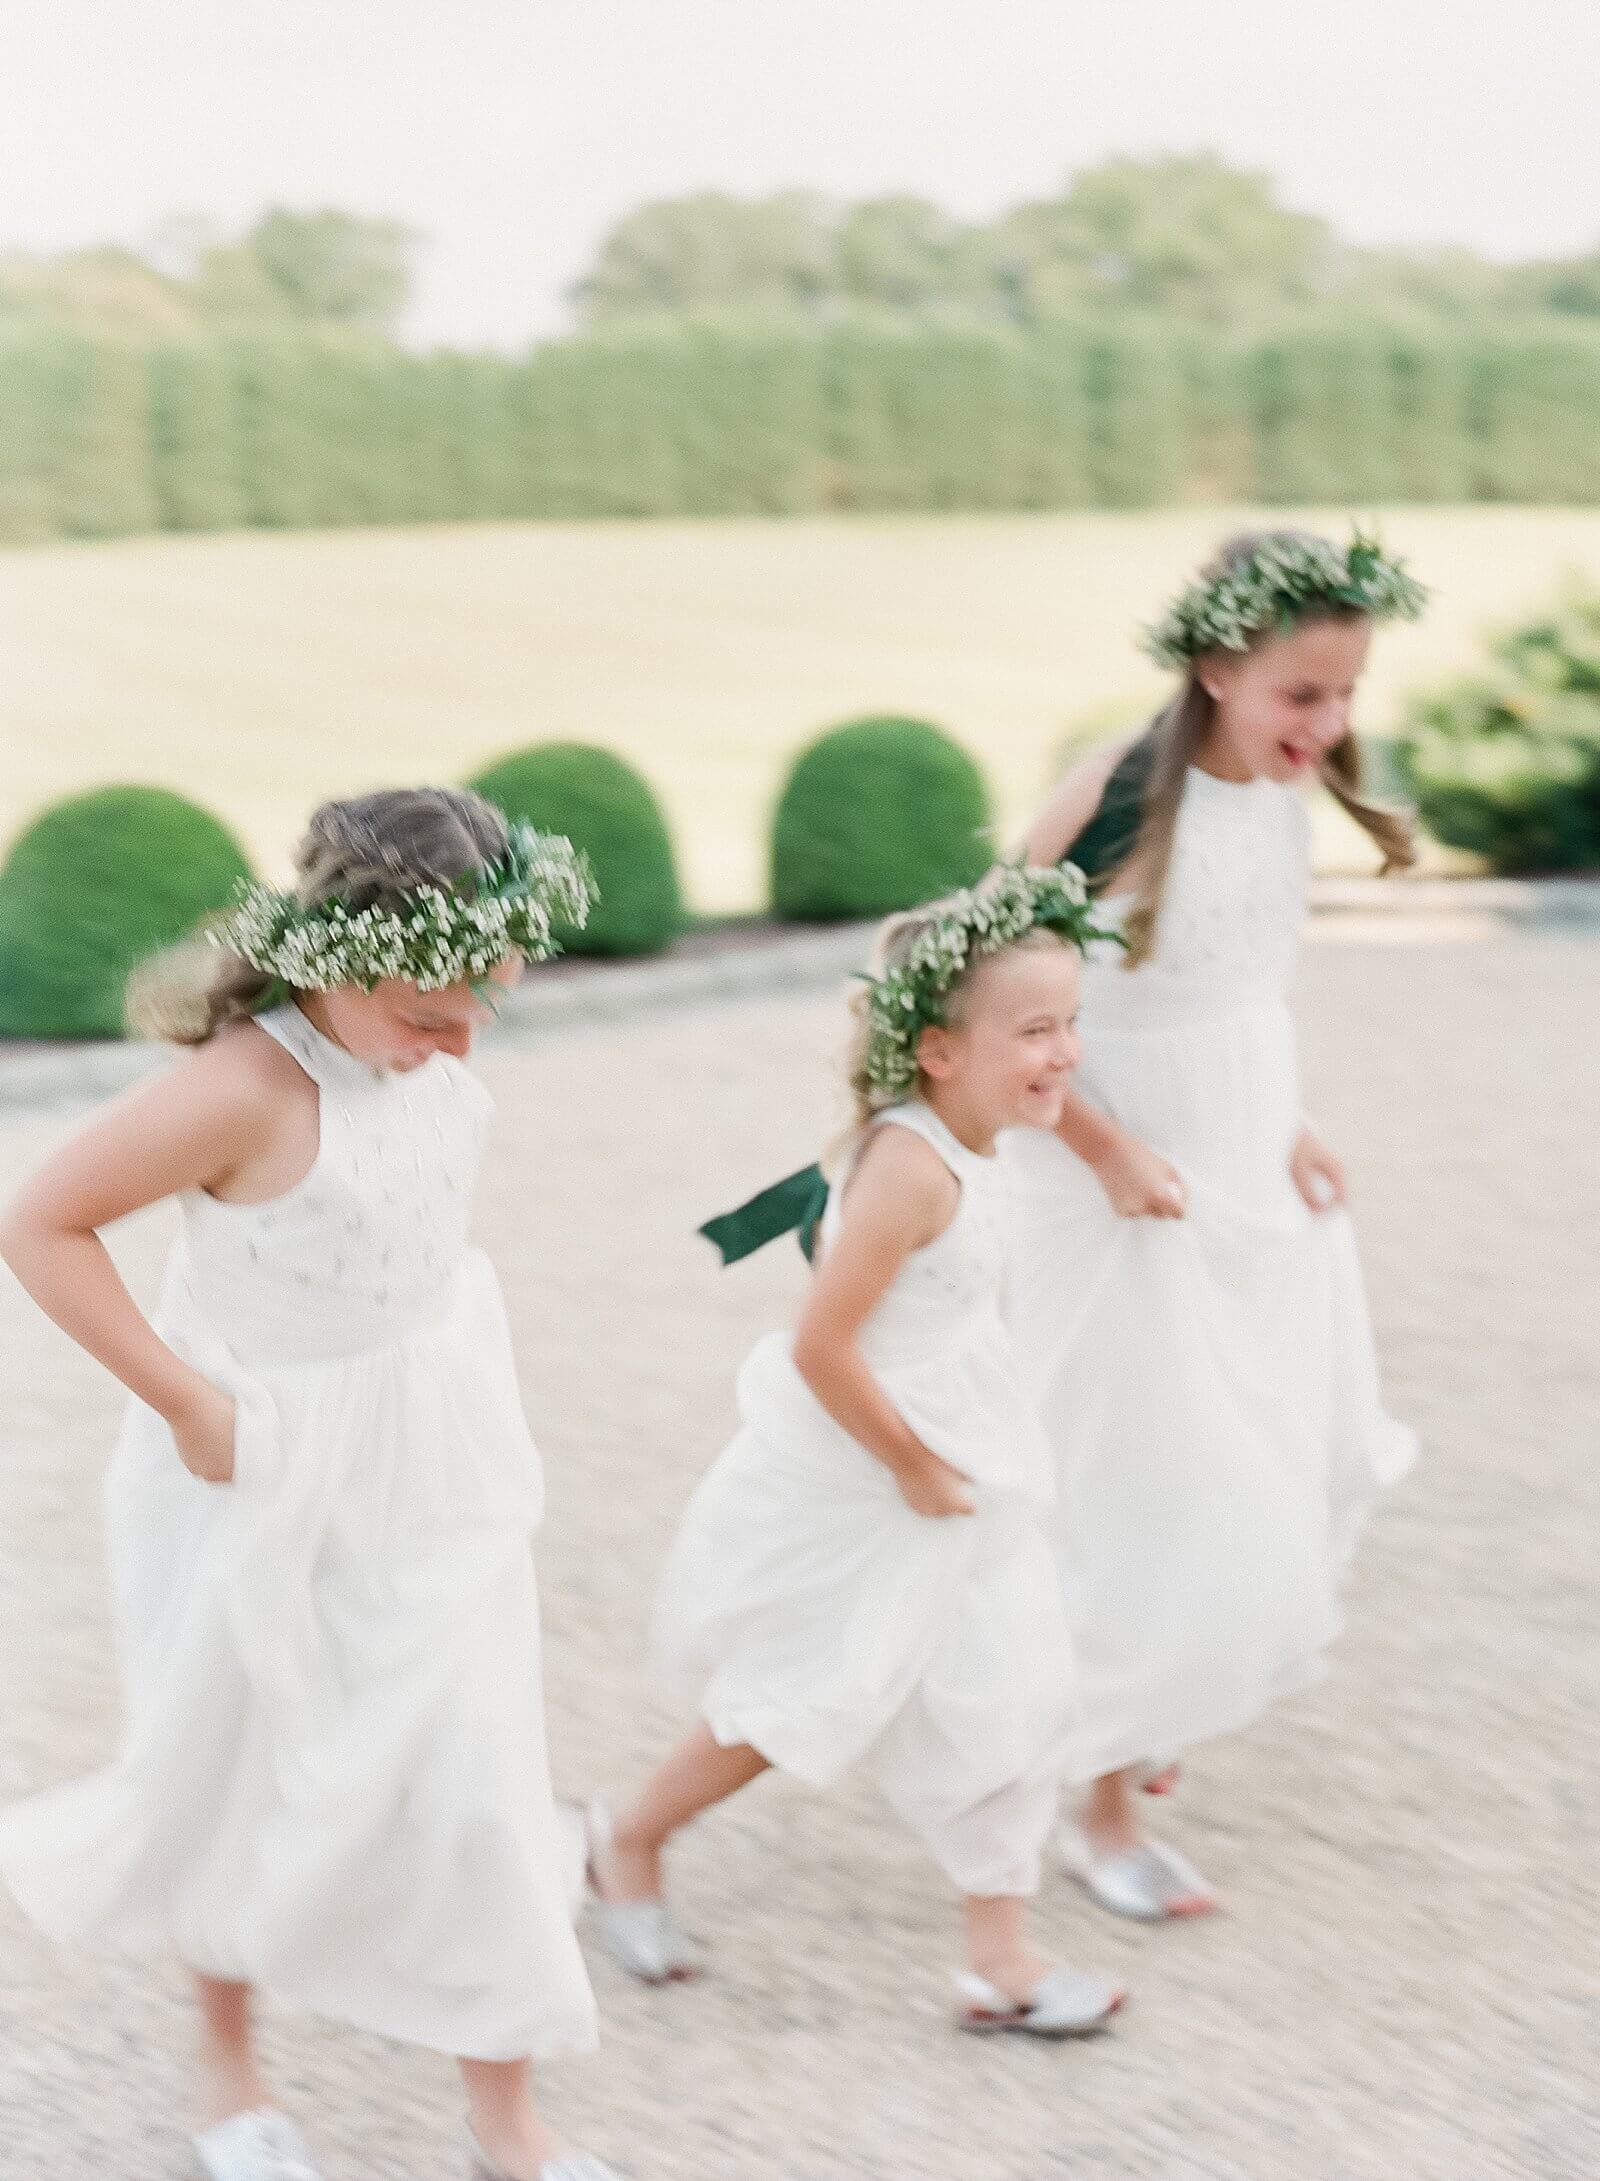 Flower girls at a wedding